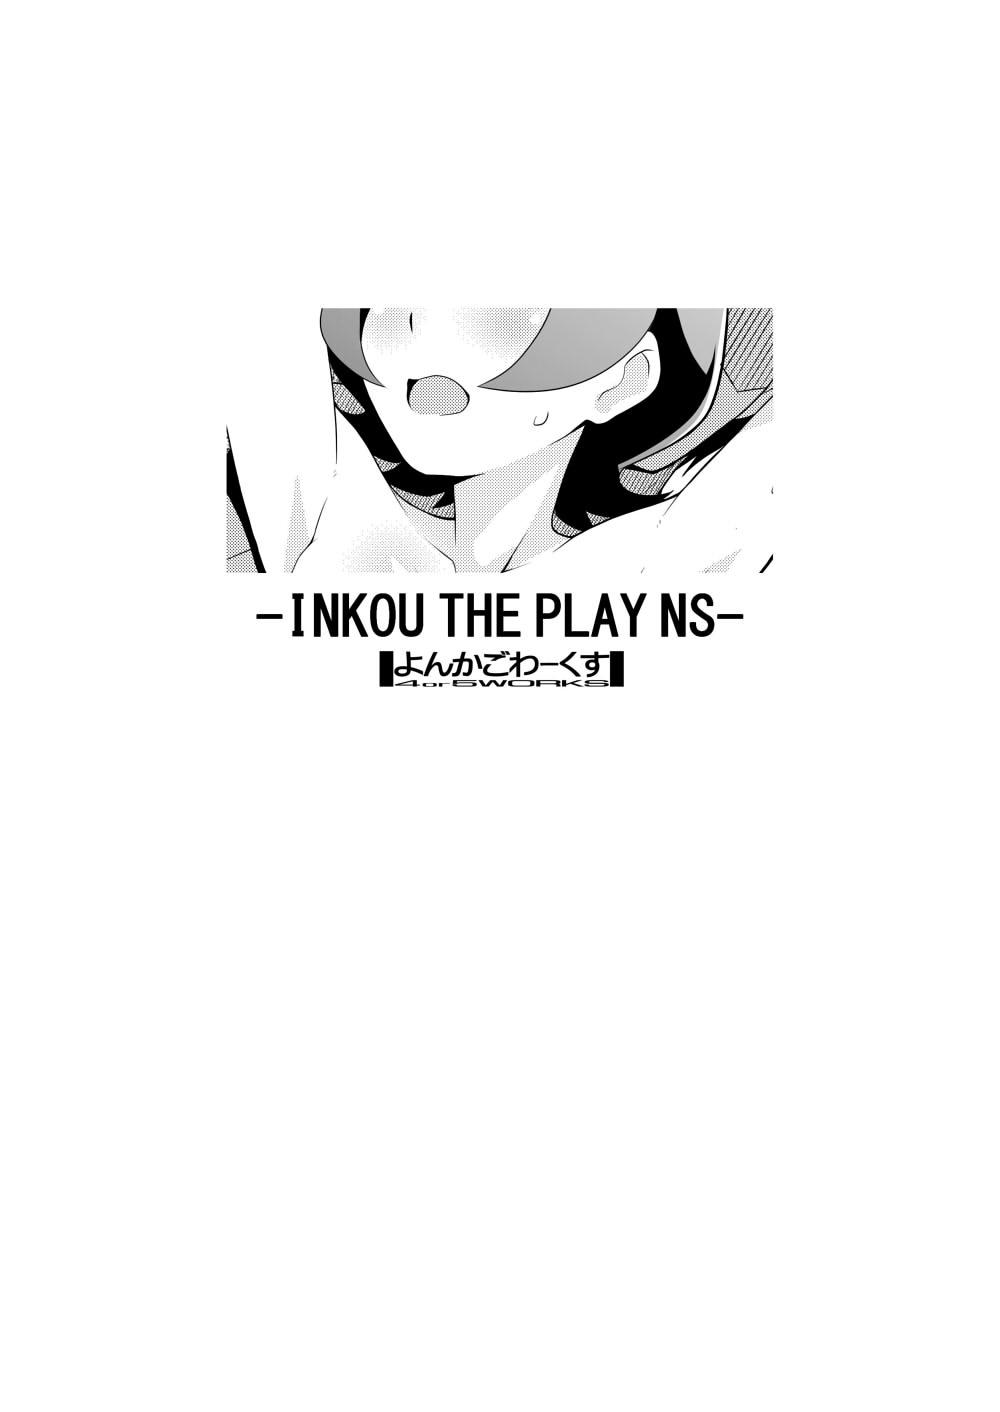 INKOU THE PLAY NS 13